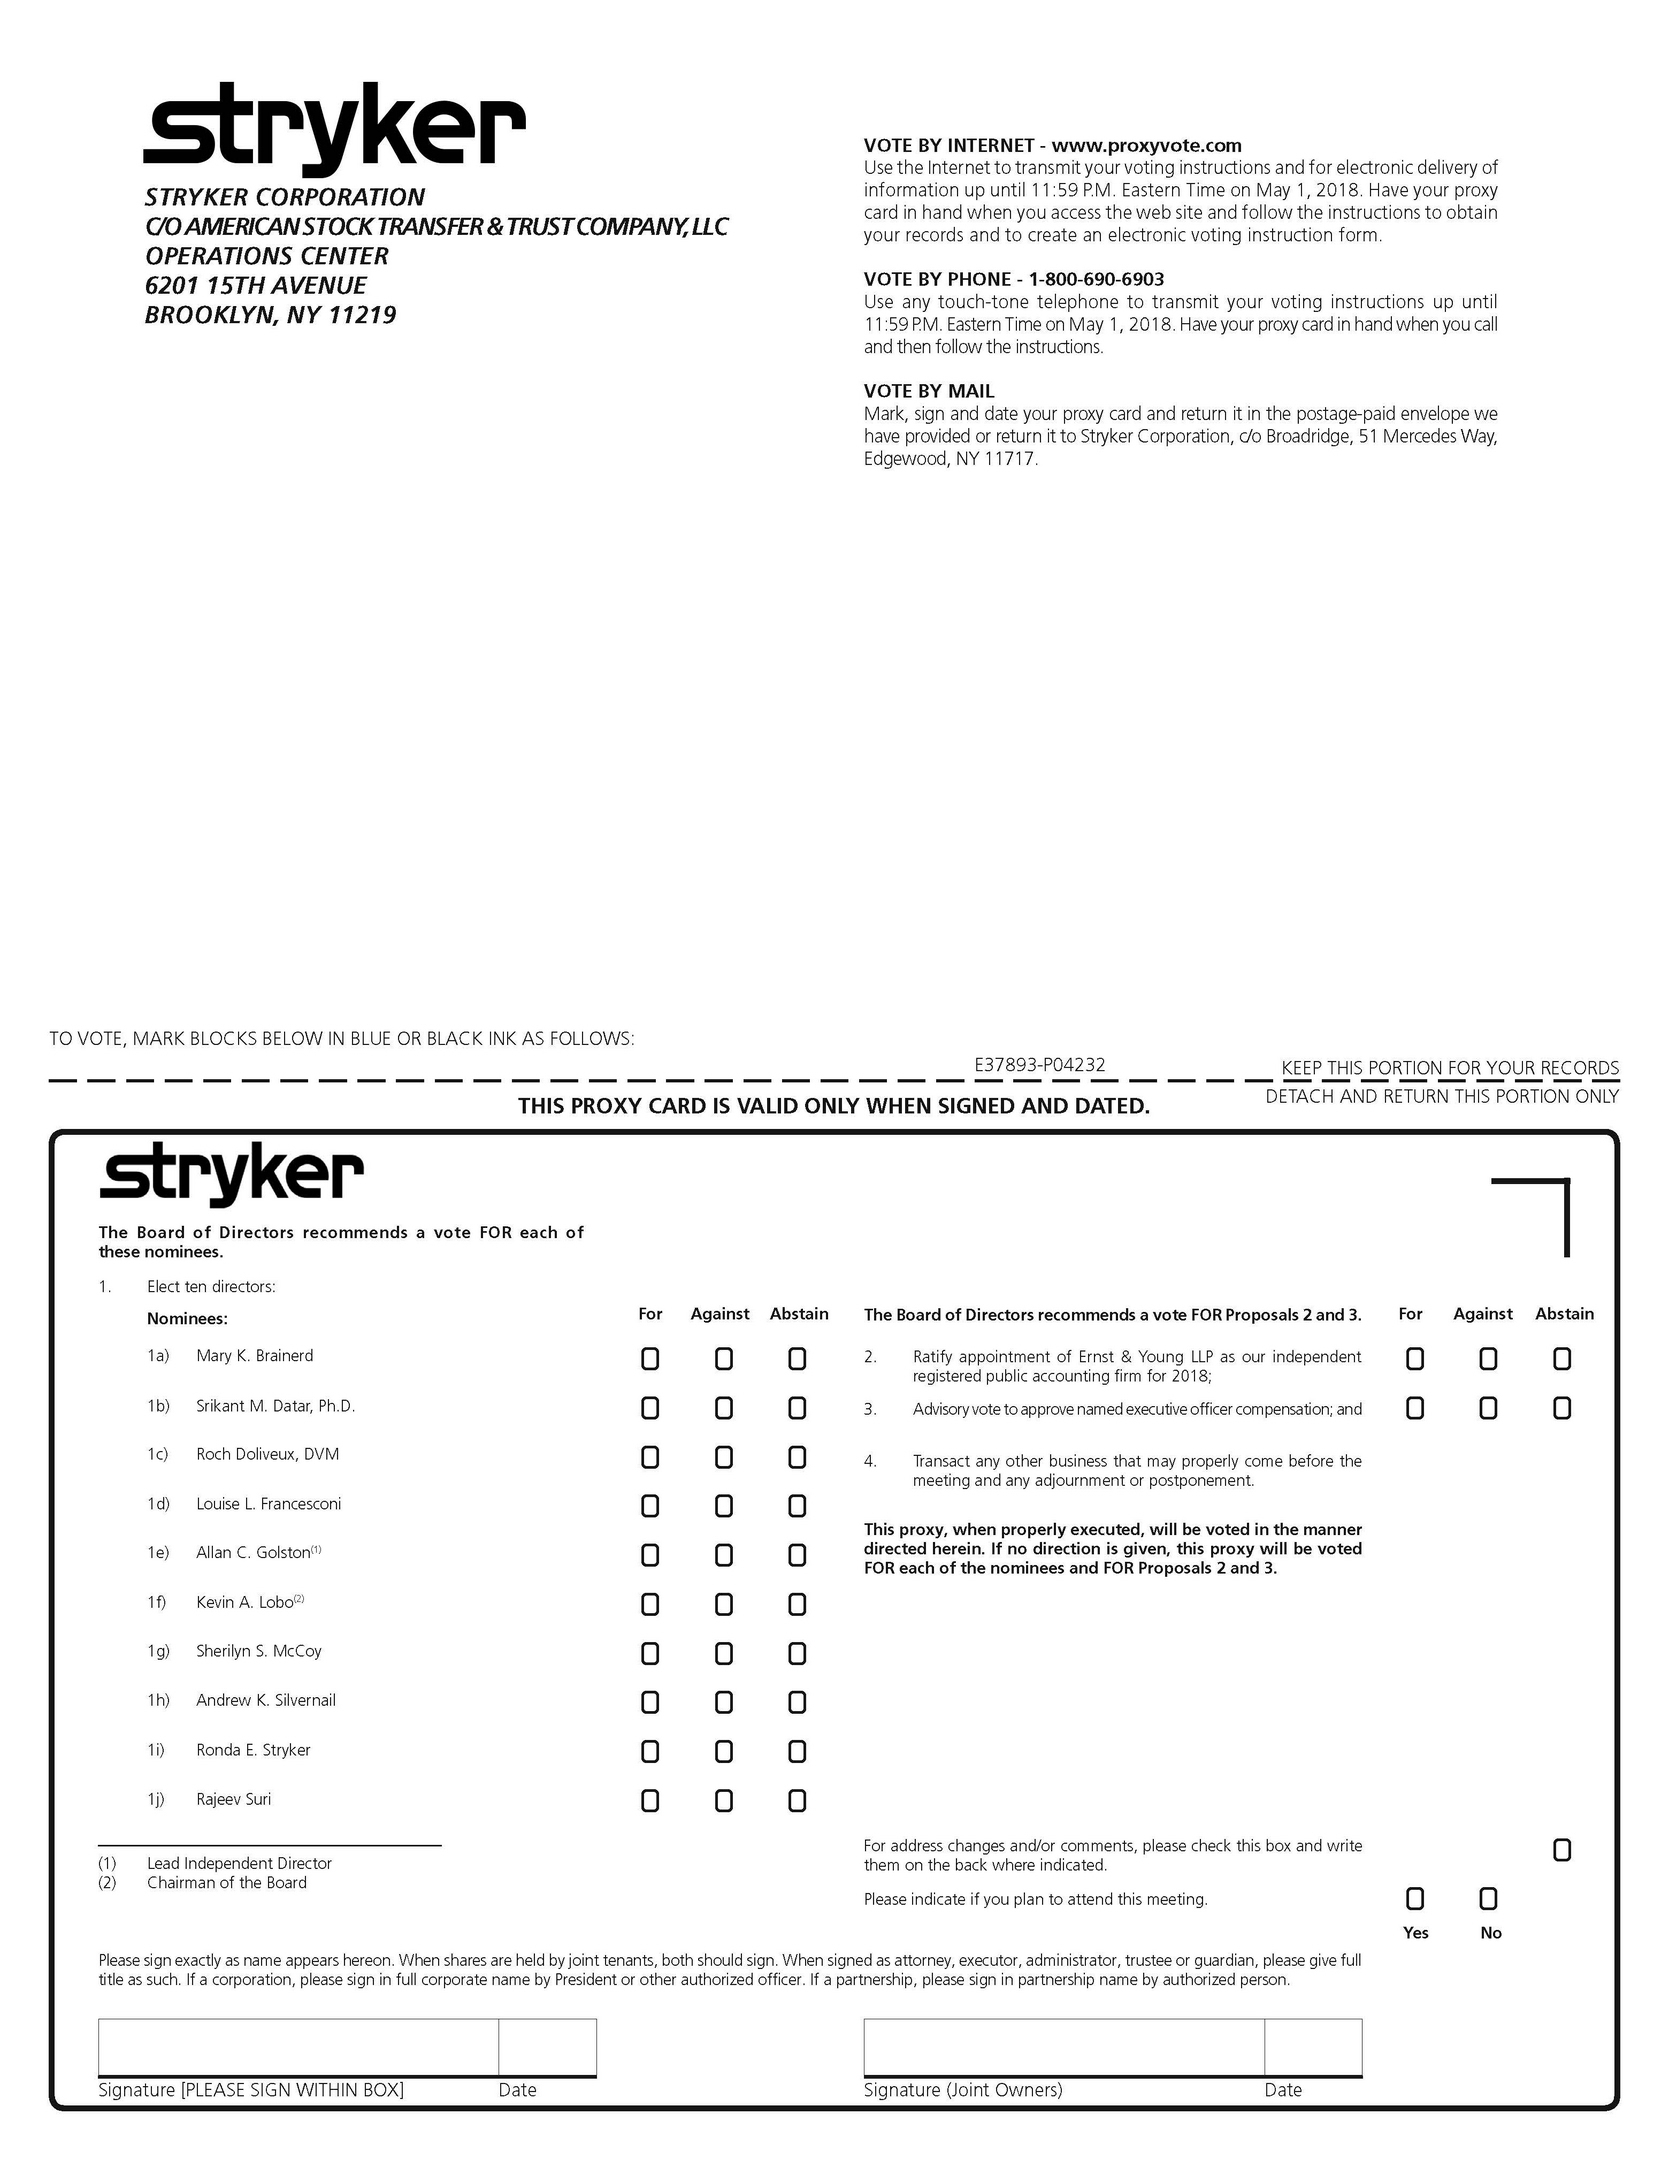 sykproxycard1a01.jpg